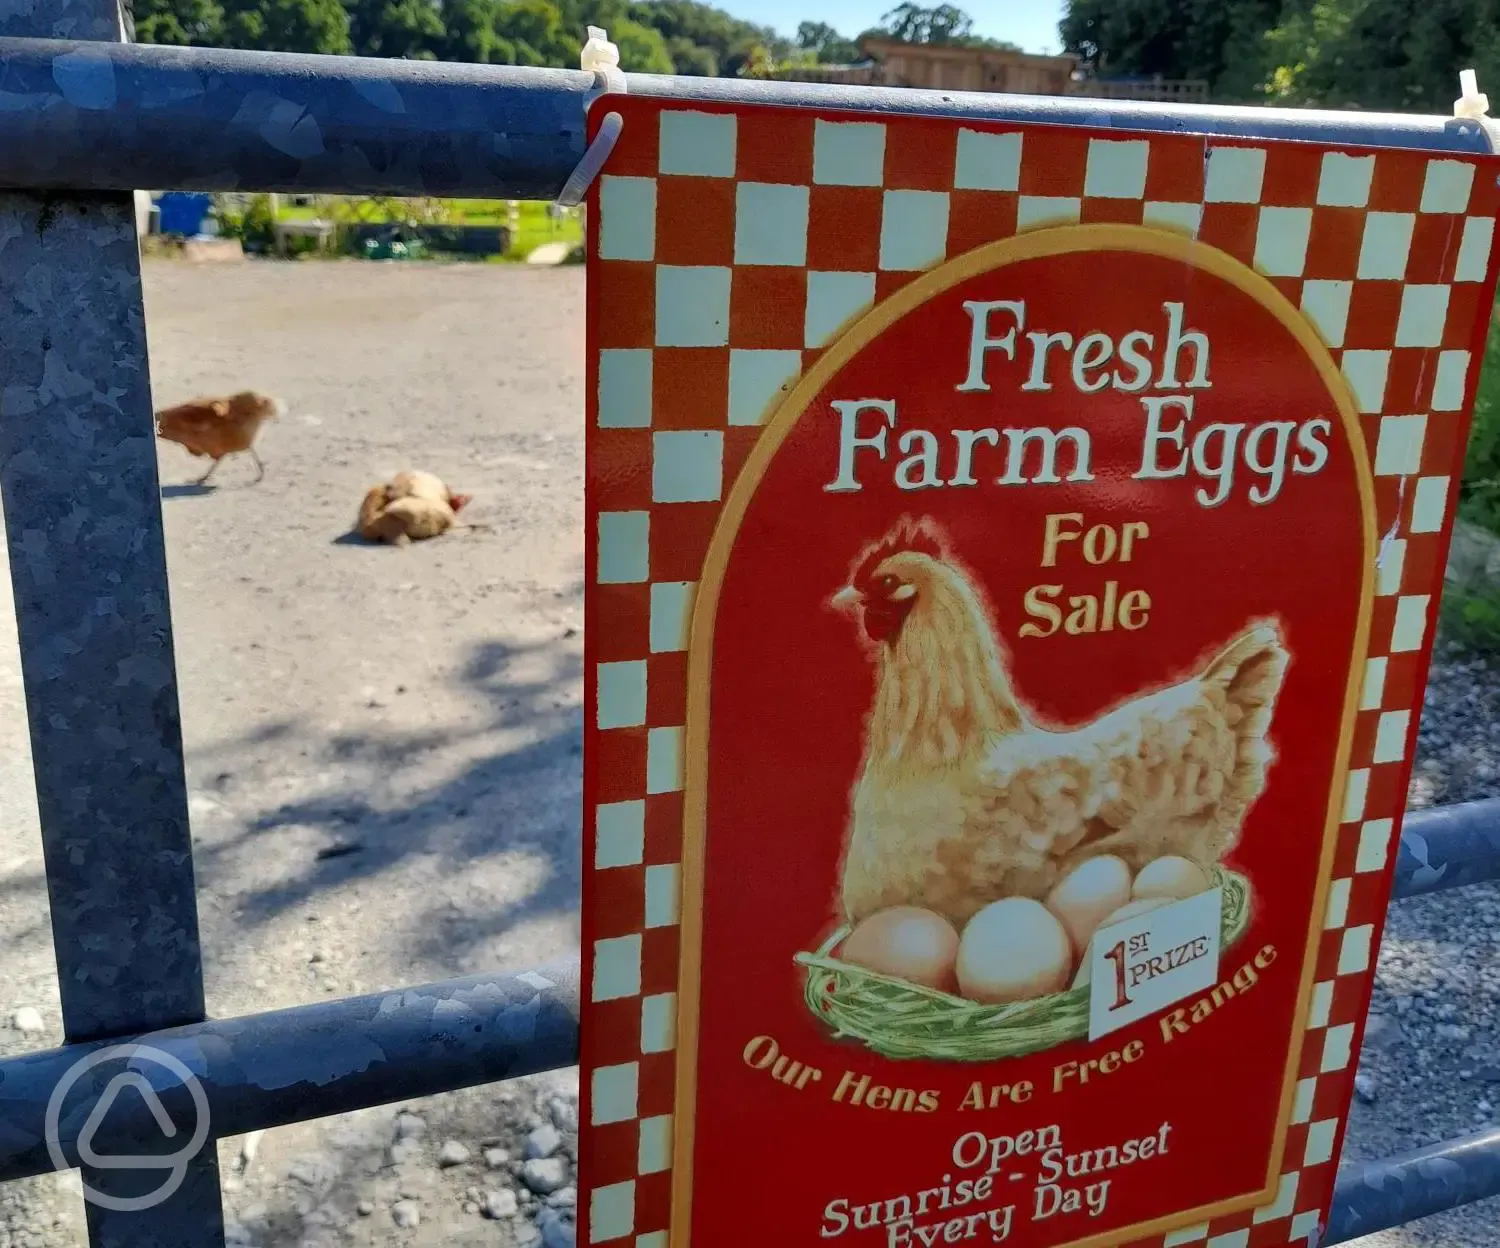 Free range eggs for sale!